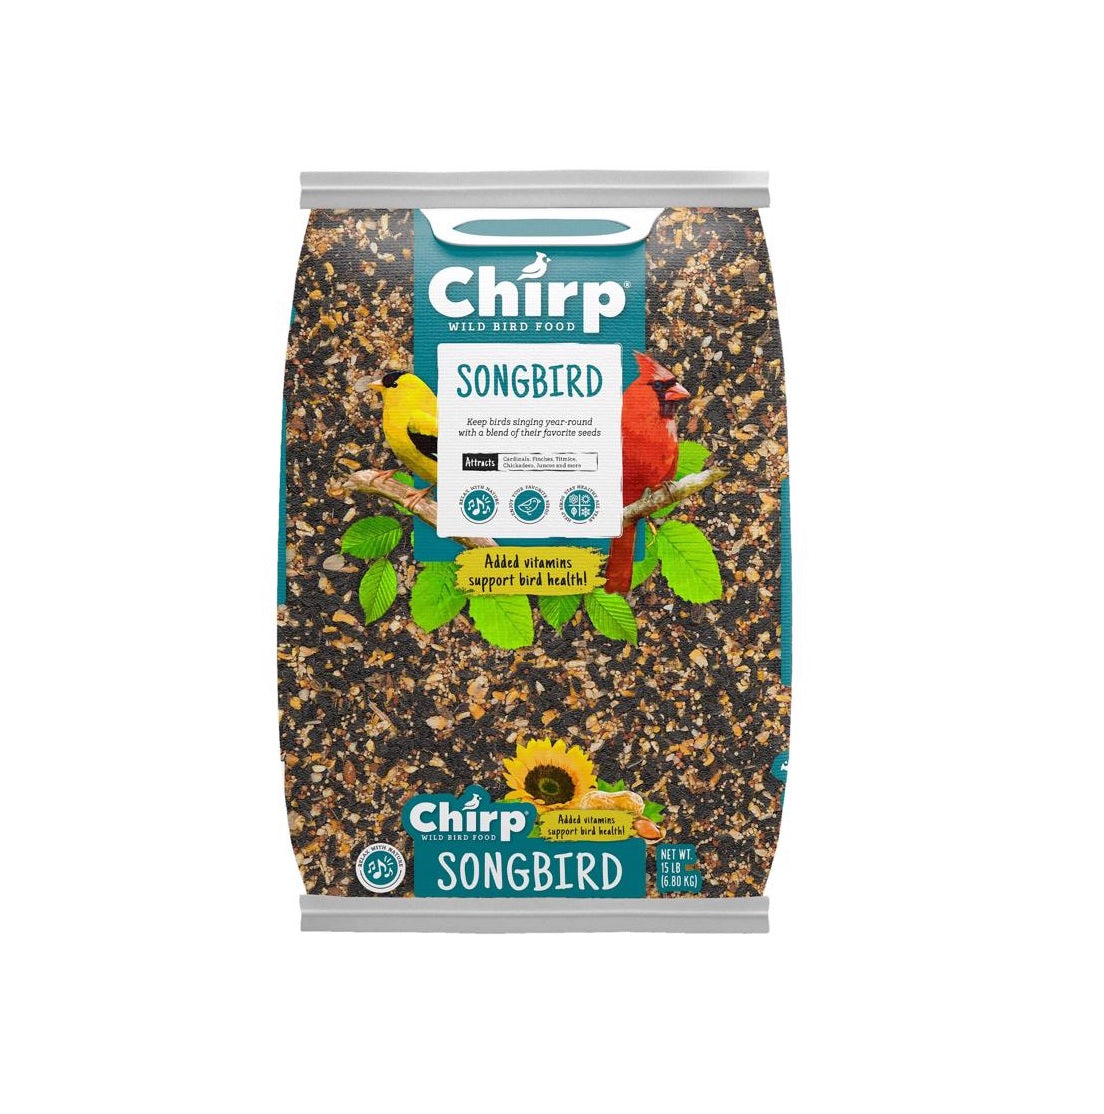 Chirp 14980 Songbird Black Oil Sunflower Wild Bird Food, 15 lb